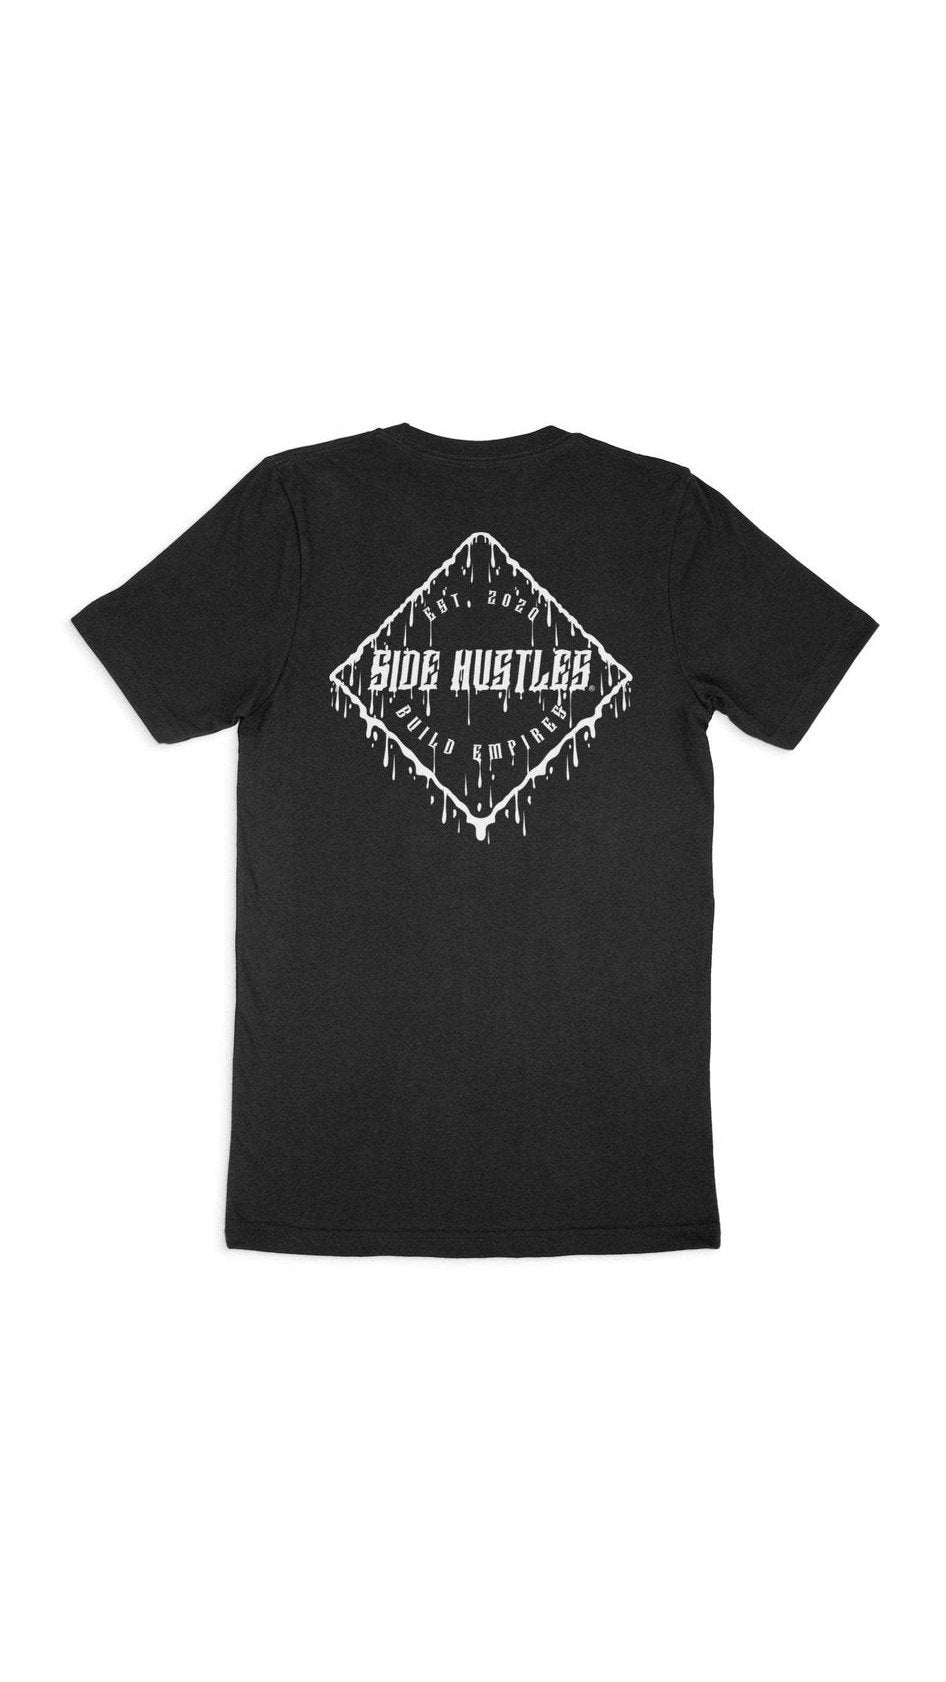 symbolic side hustle t shirt that represents the struggle of entrepreneurship